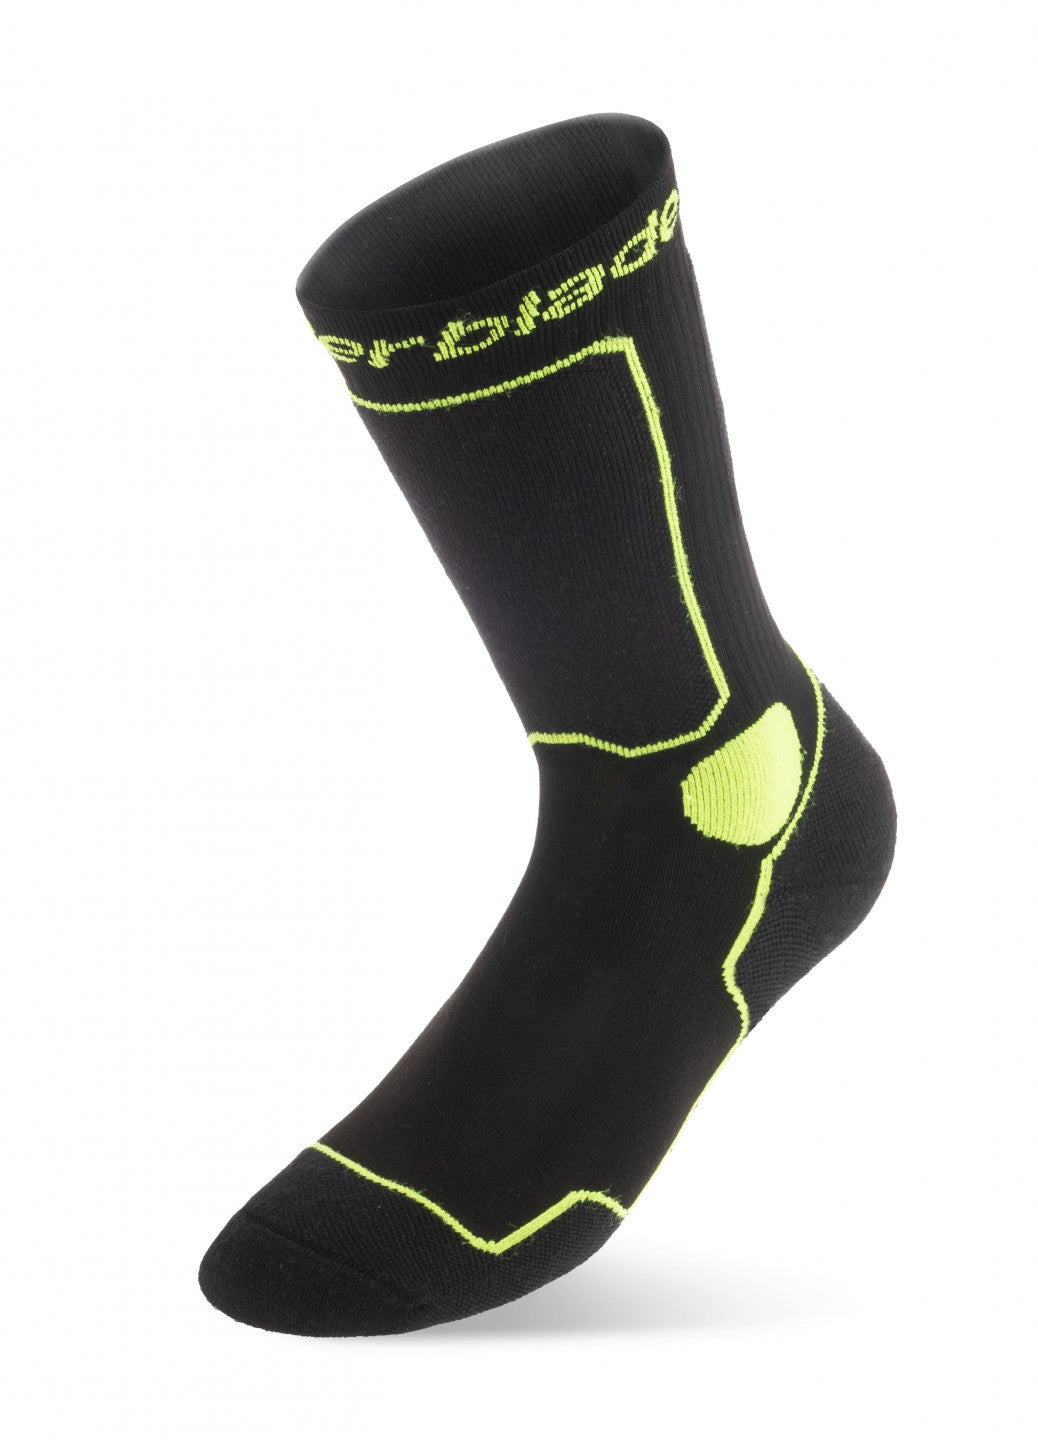 Skate Socks - Black/Green